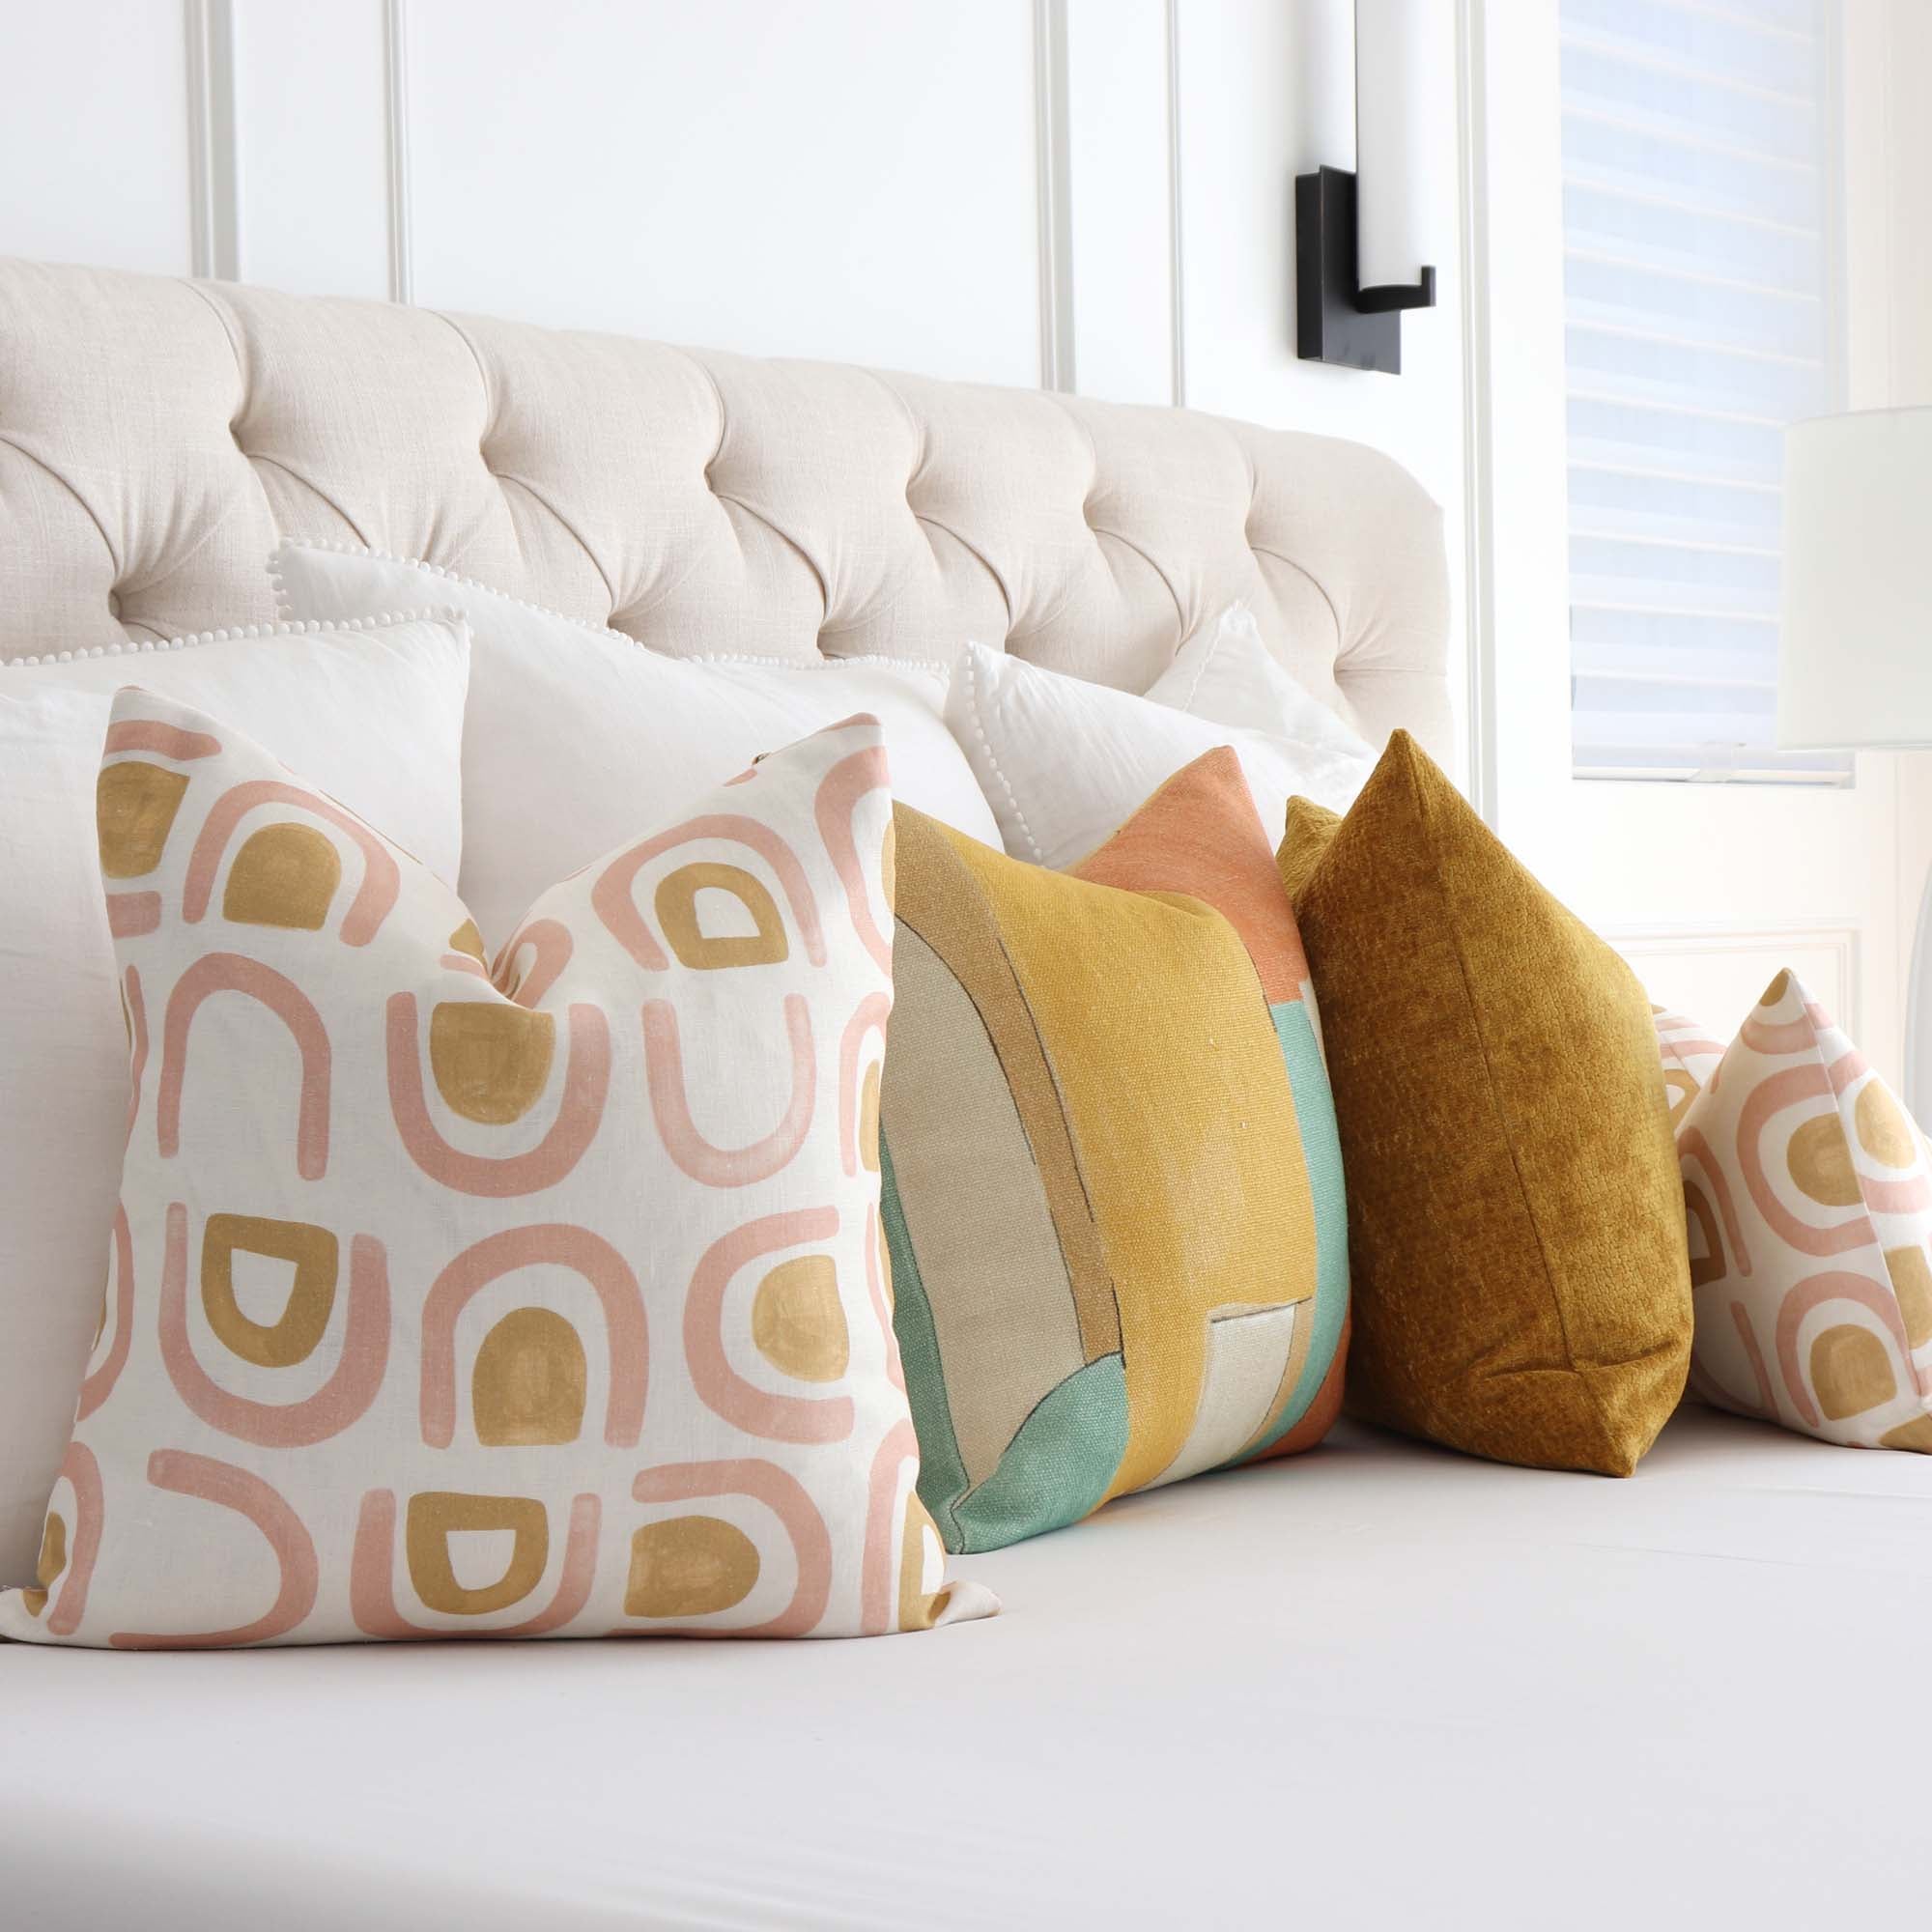 Schumacher Hidaya Williams Threshold Salt Ochre Graphic Print Linen Decorative Designer Throw Pillow Cover in Bedroom with Coordinating Throw Pillows